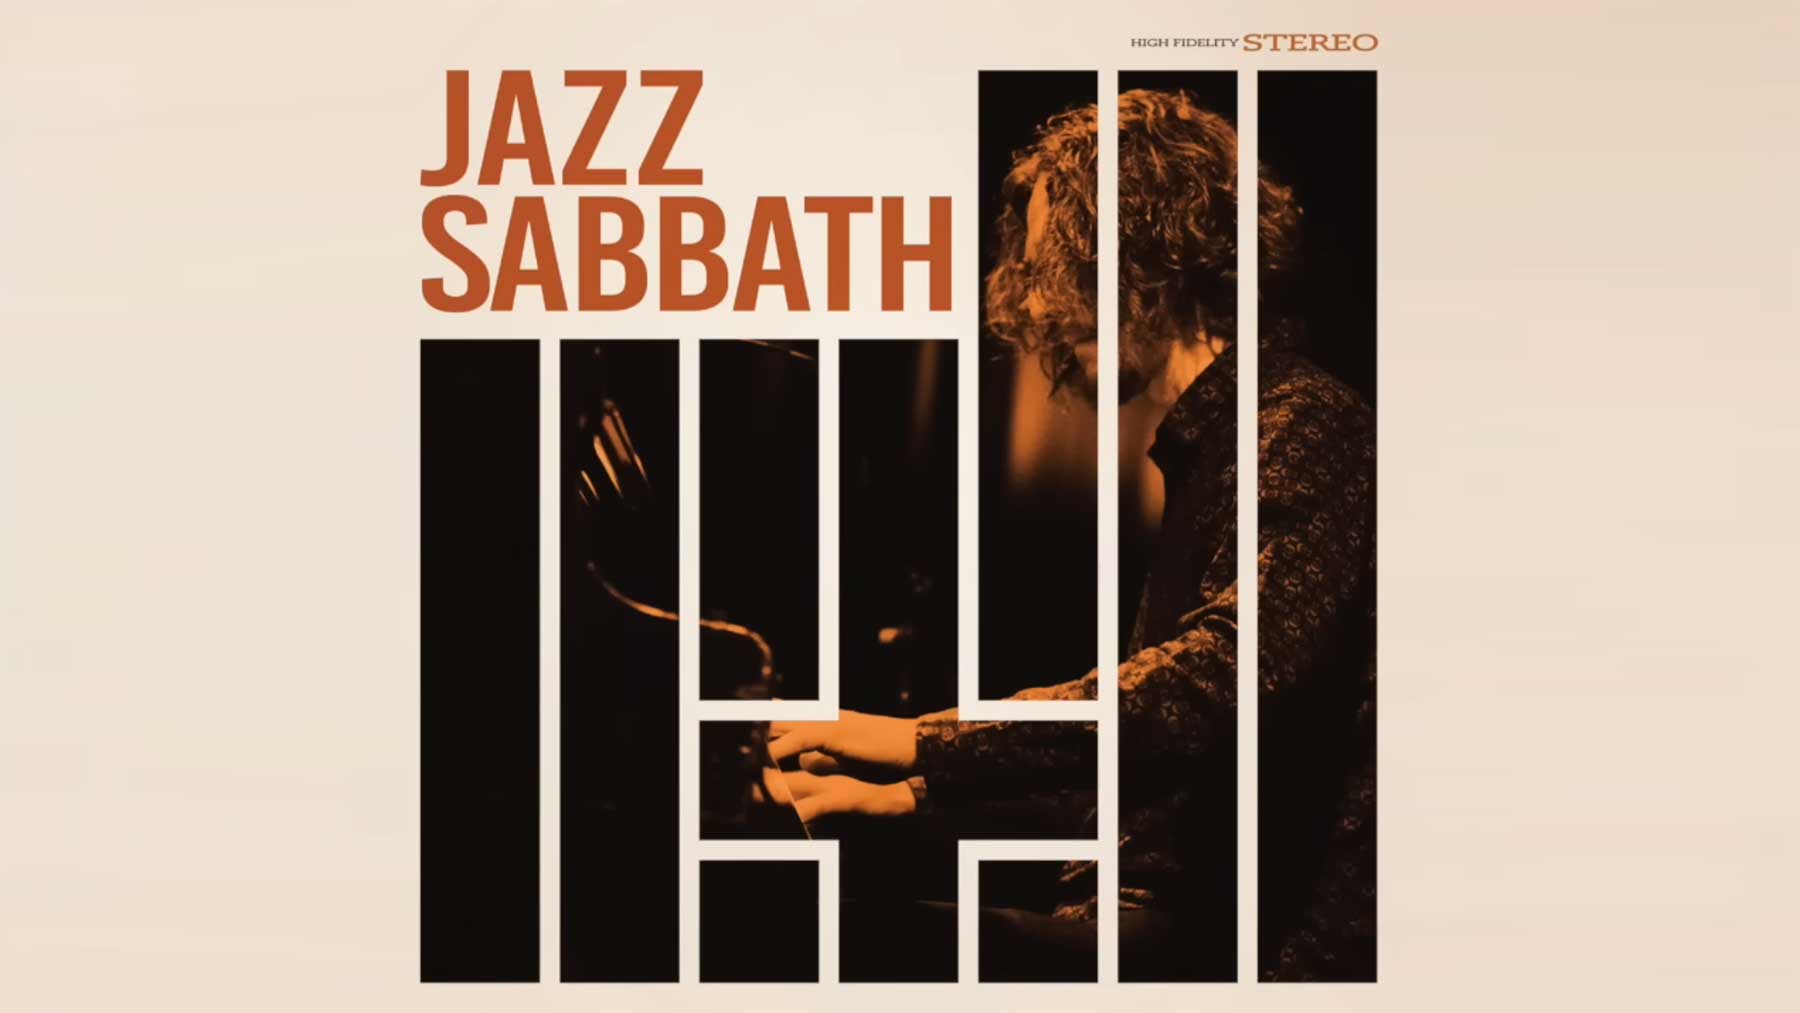 Black Sabbath als Jazz-Musik gecovert